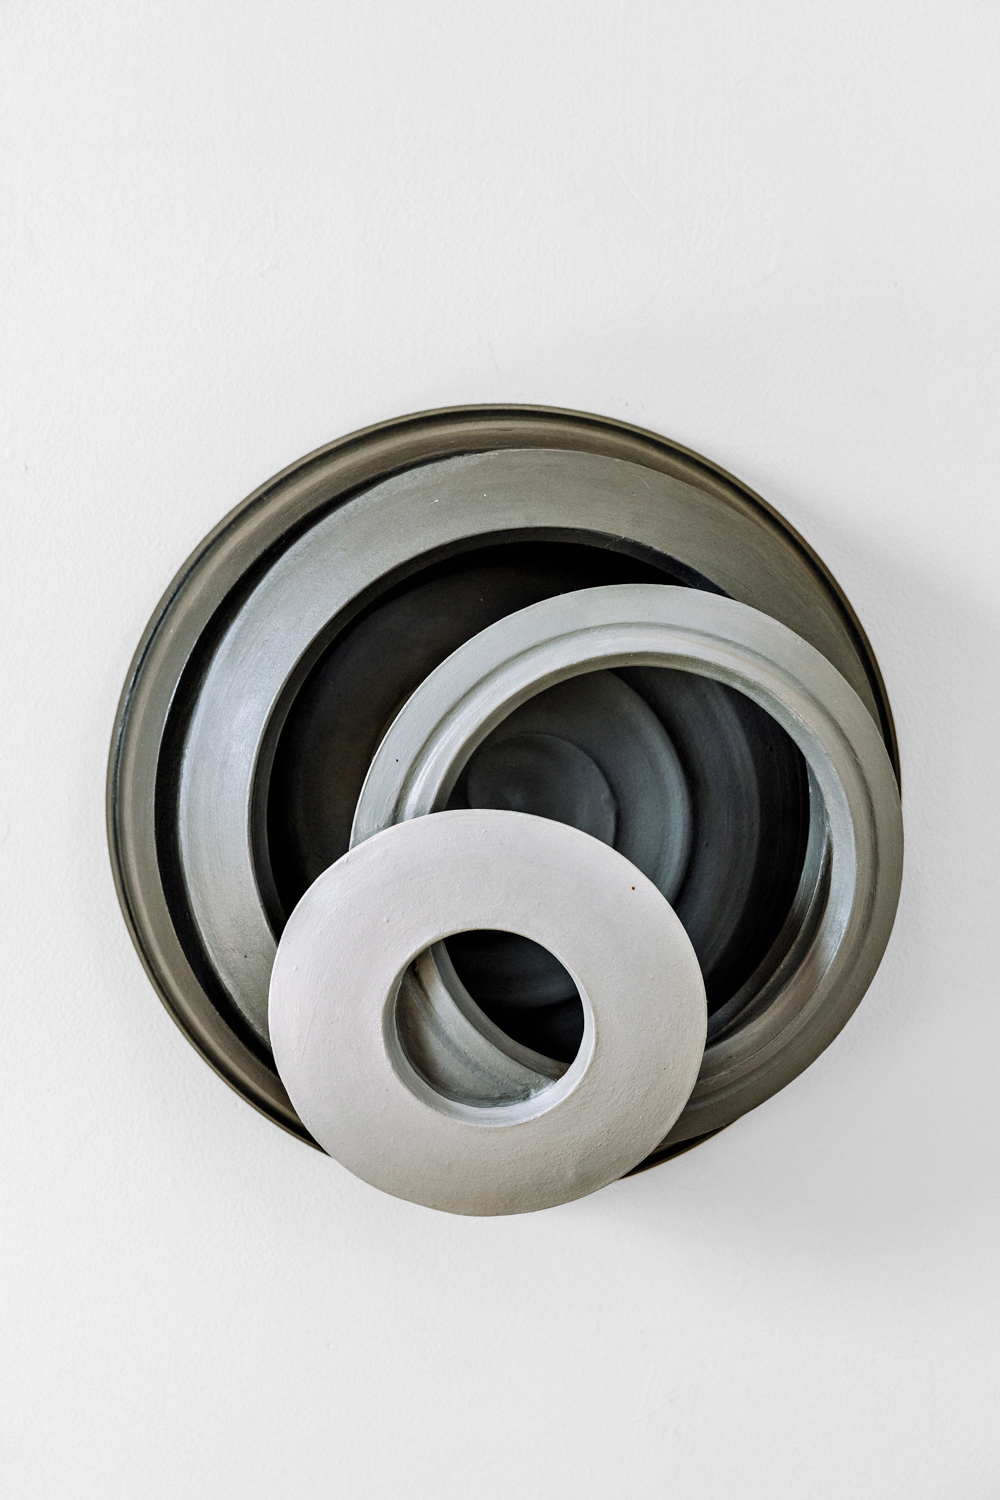 ceramic piece made of gray circles